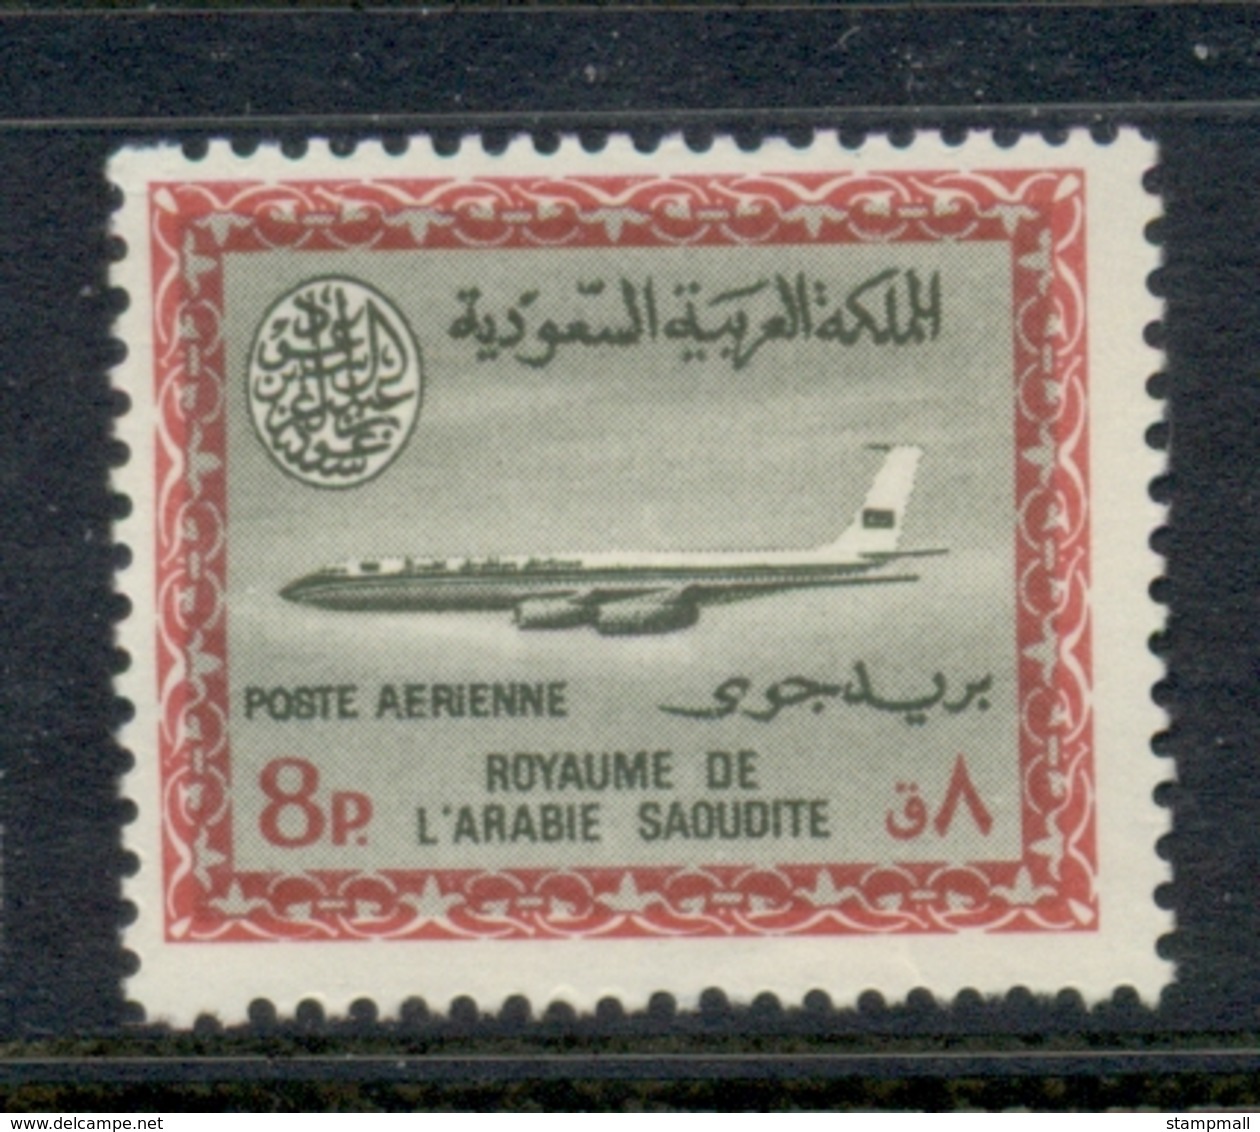 Saudi Arabia 1965-70 Airmail 8p MUH - Saudi Arabia